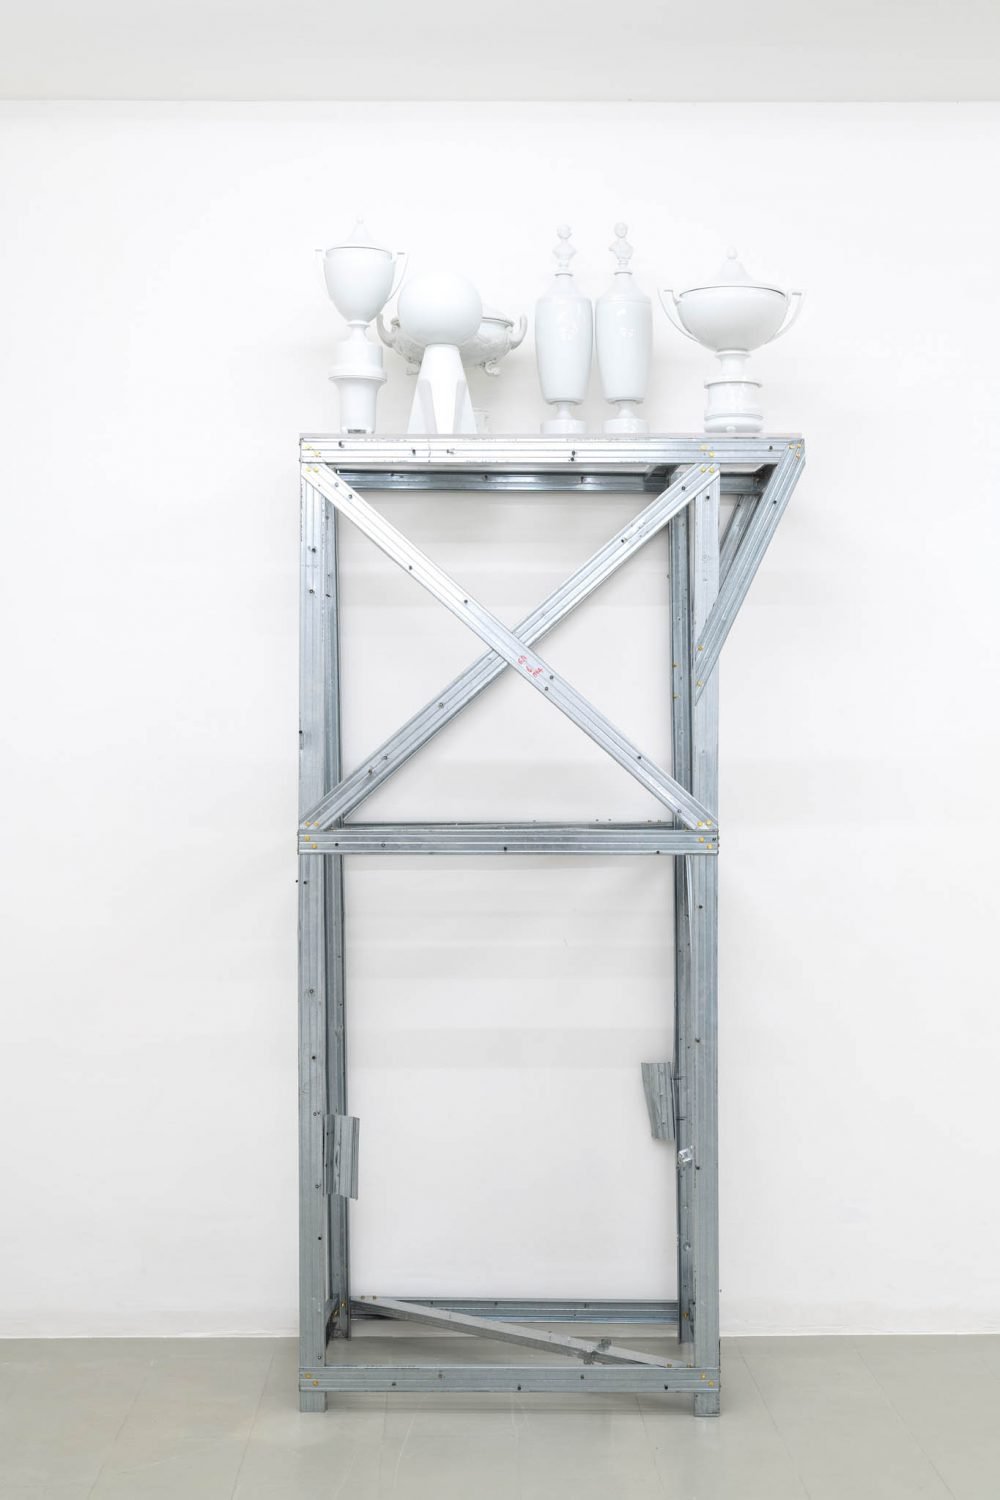 Plamen DejanoffUntitled, 2019Aluminium, plexiglass, 6 porcelain sculptures229 x 126 cm